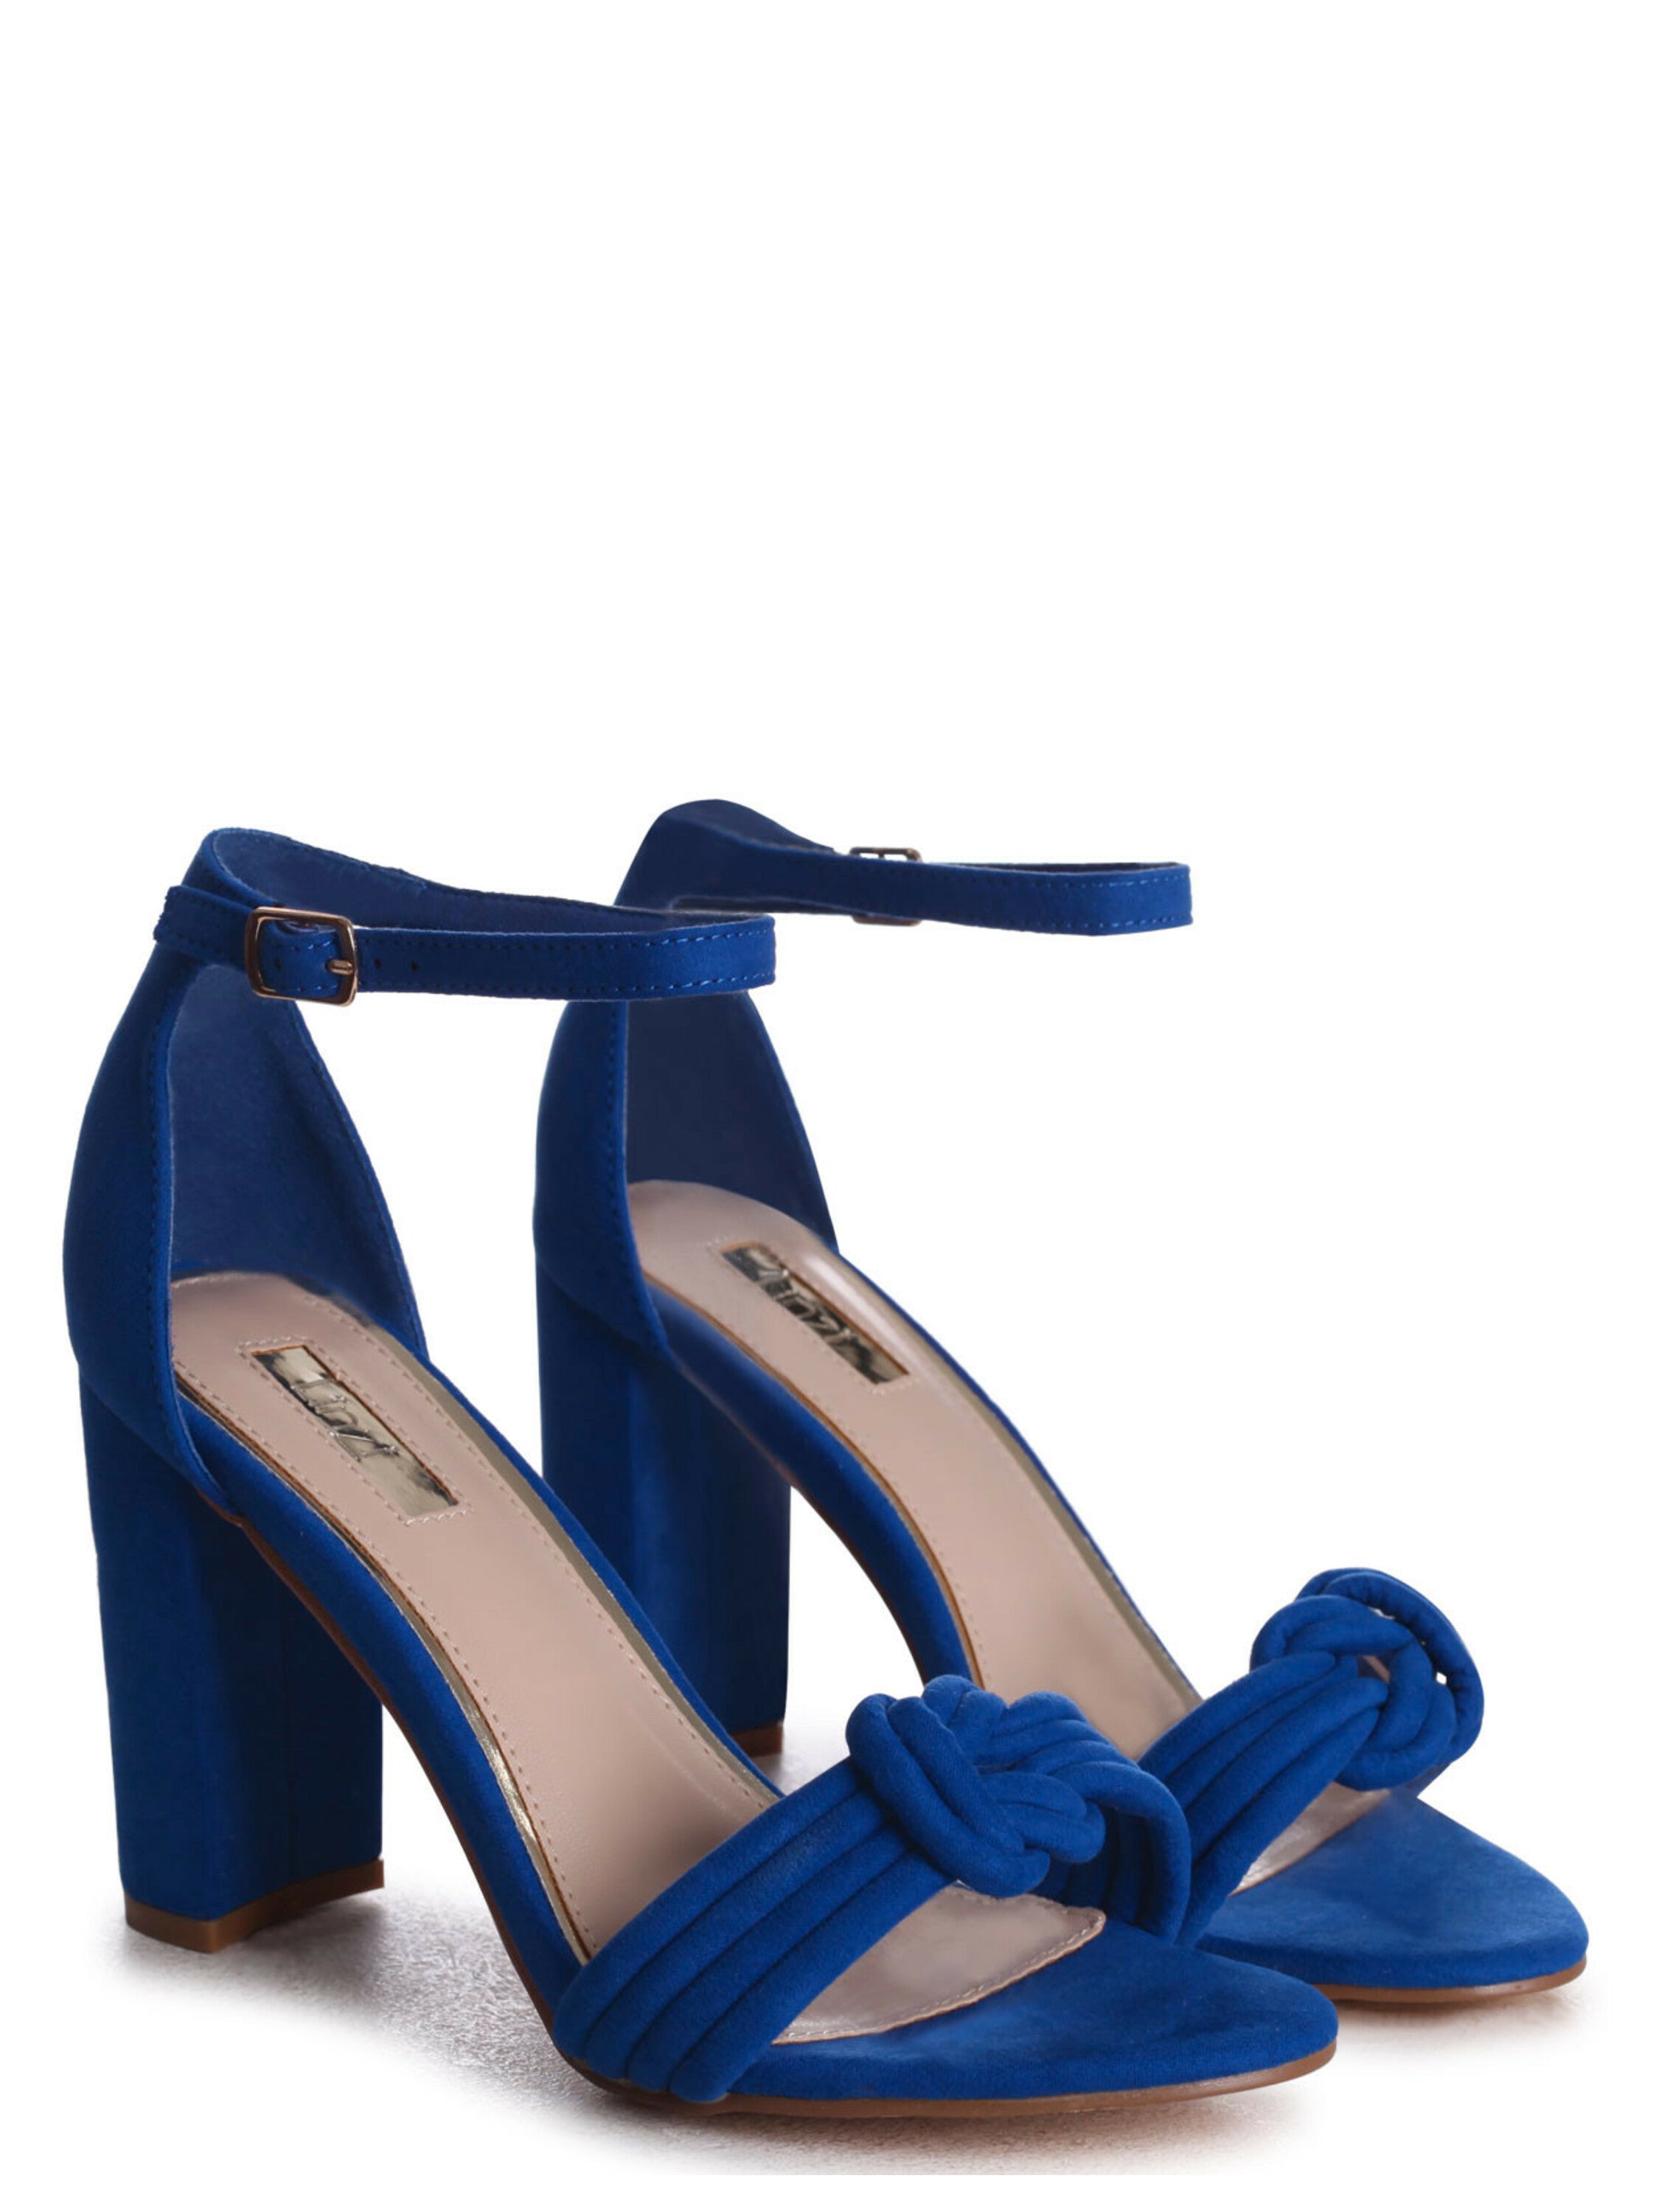 Buy Ravel ladies' Dorea shoes in blue online at www.ravel.co.uk.